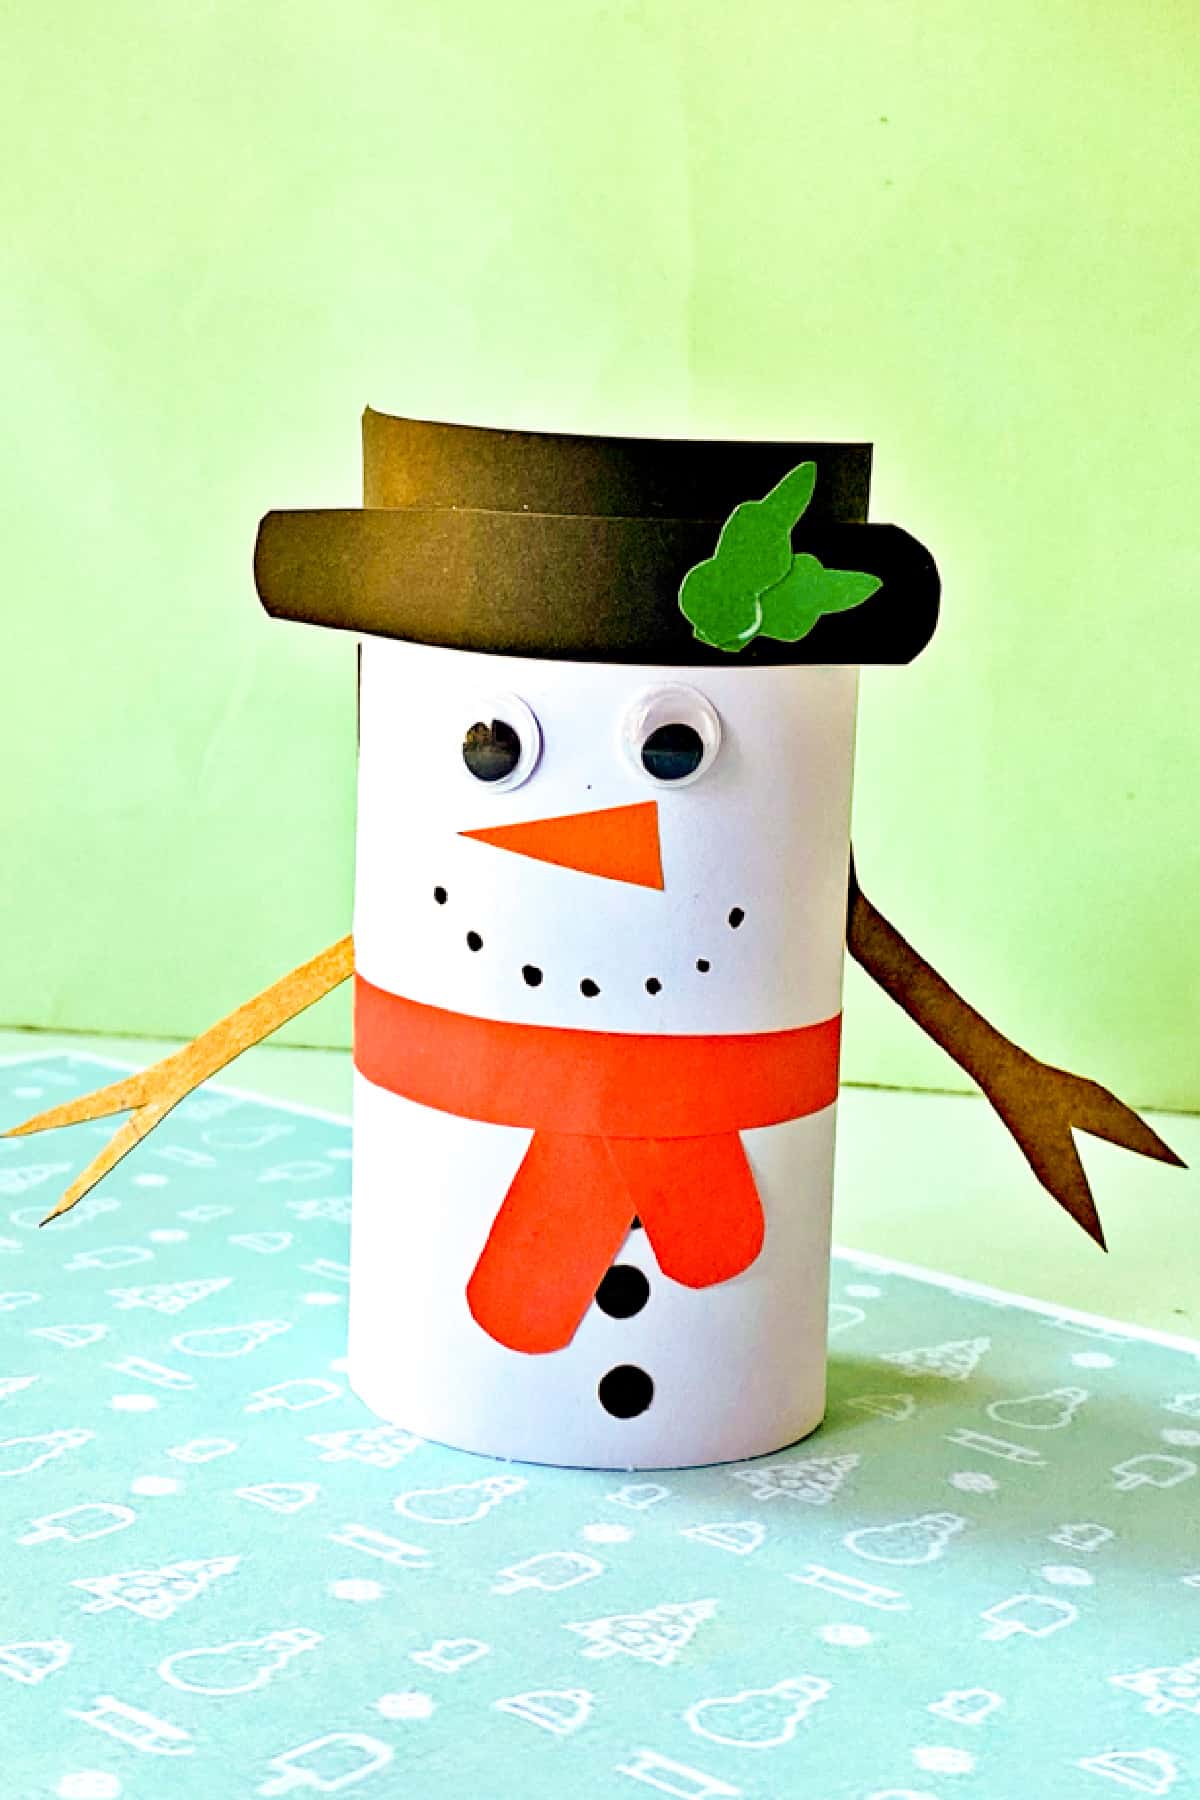 toilet paper roll snowman